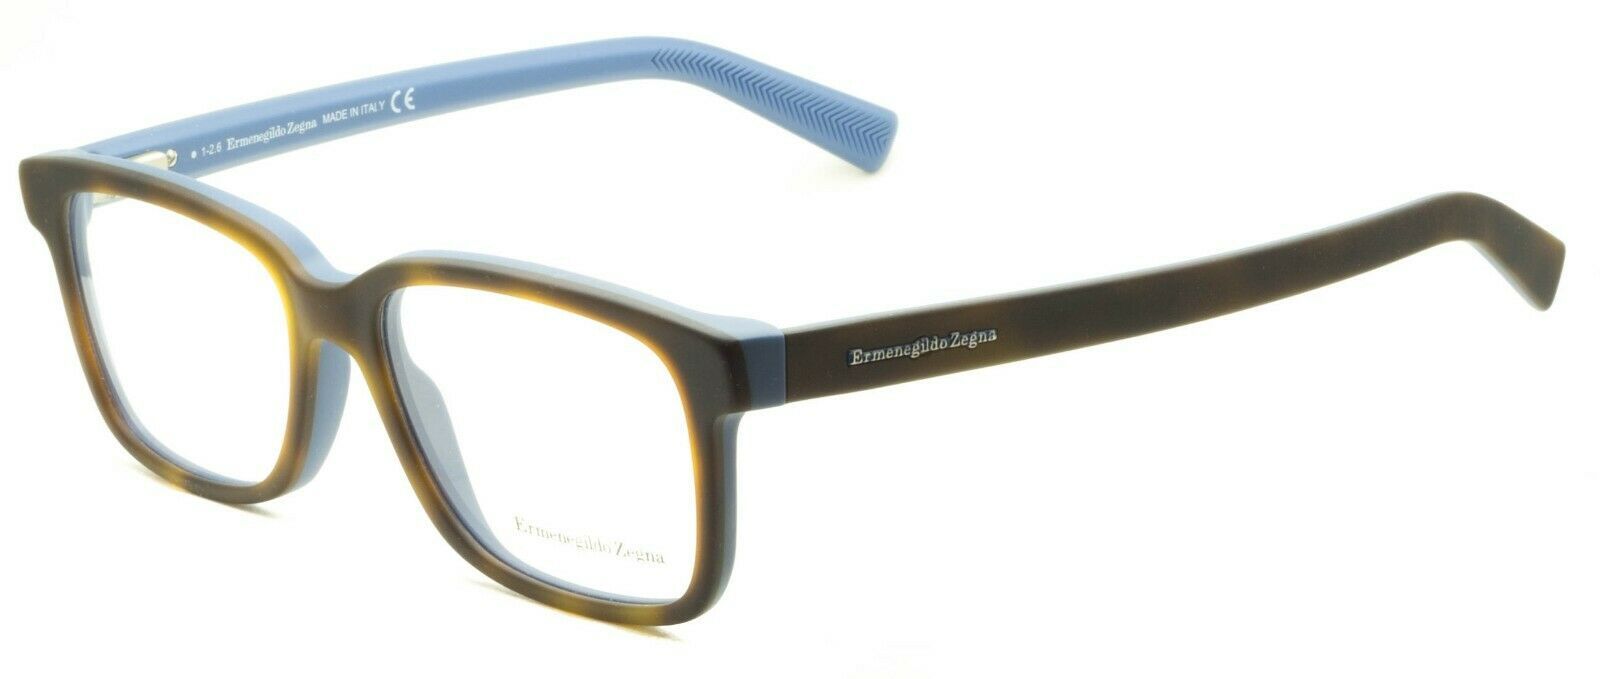 ERMENEGILDO ZEGNA EZ 5105 A56 53mm FRAMES NEW Glasses Eyewear RX Optical - Italy